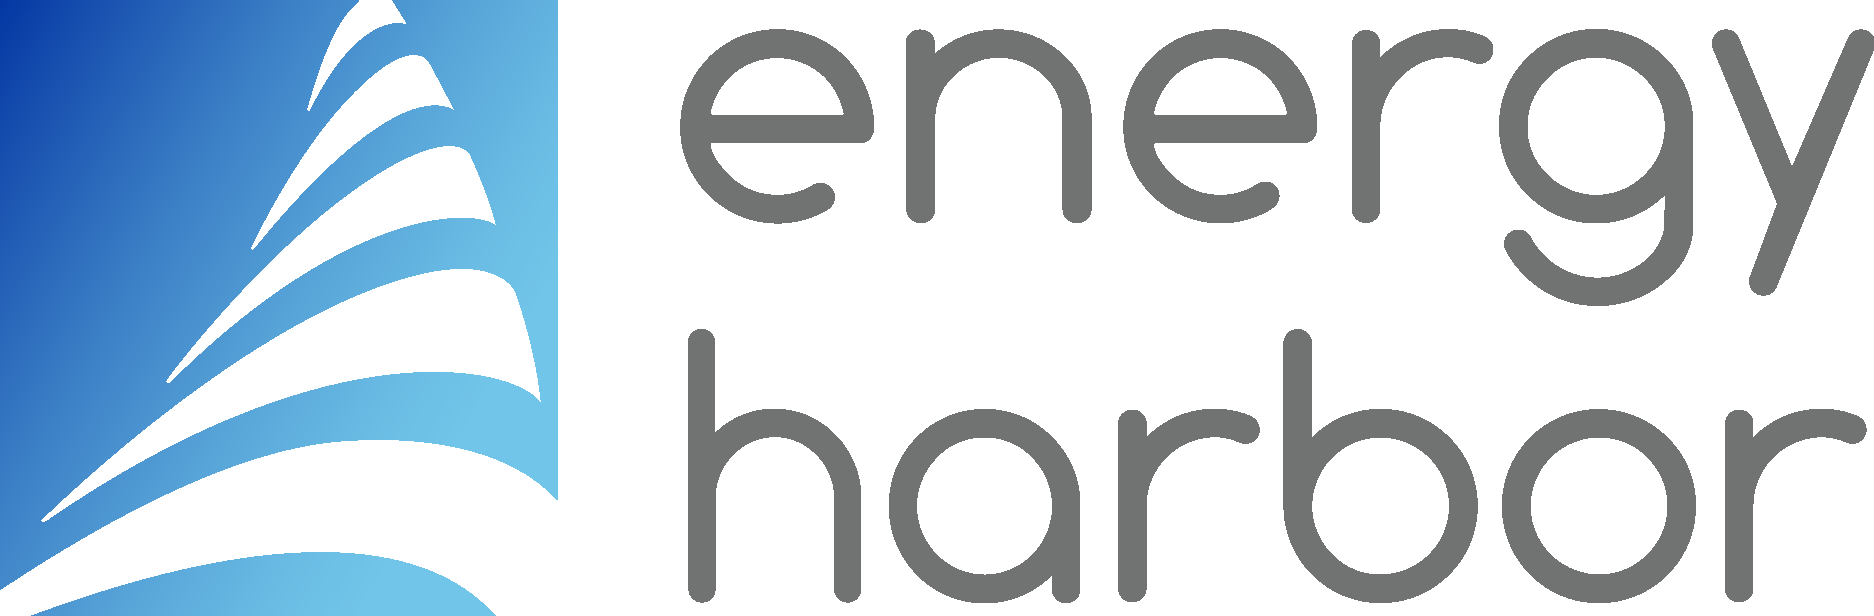 Energy Harbor Logo Vector